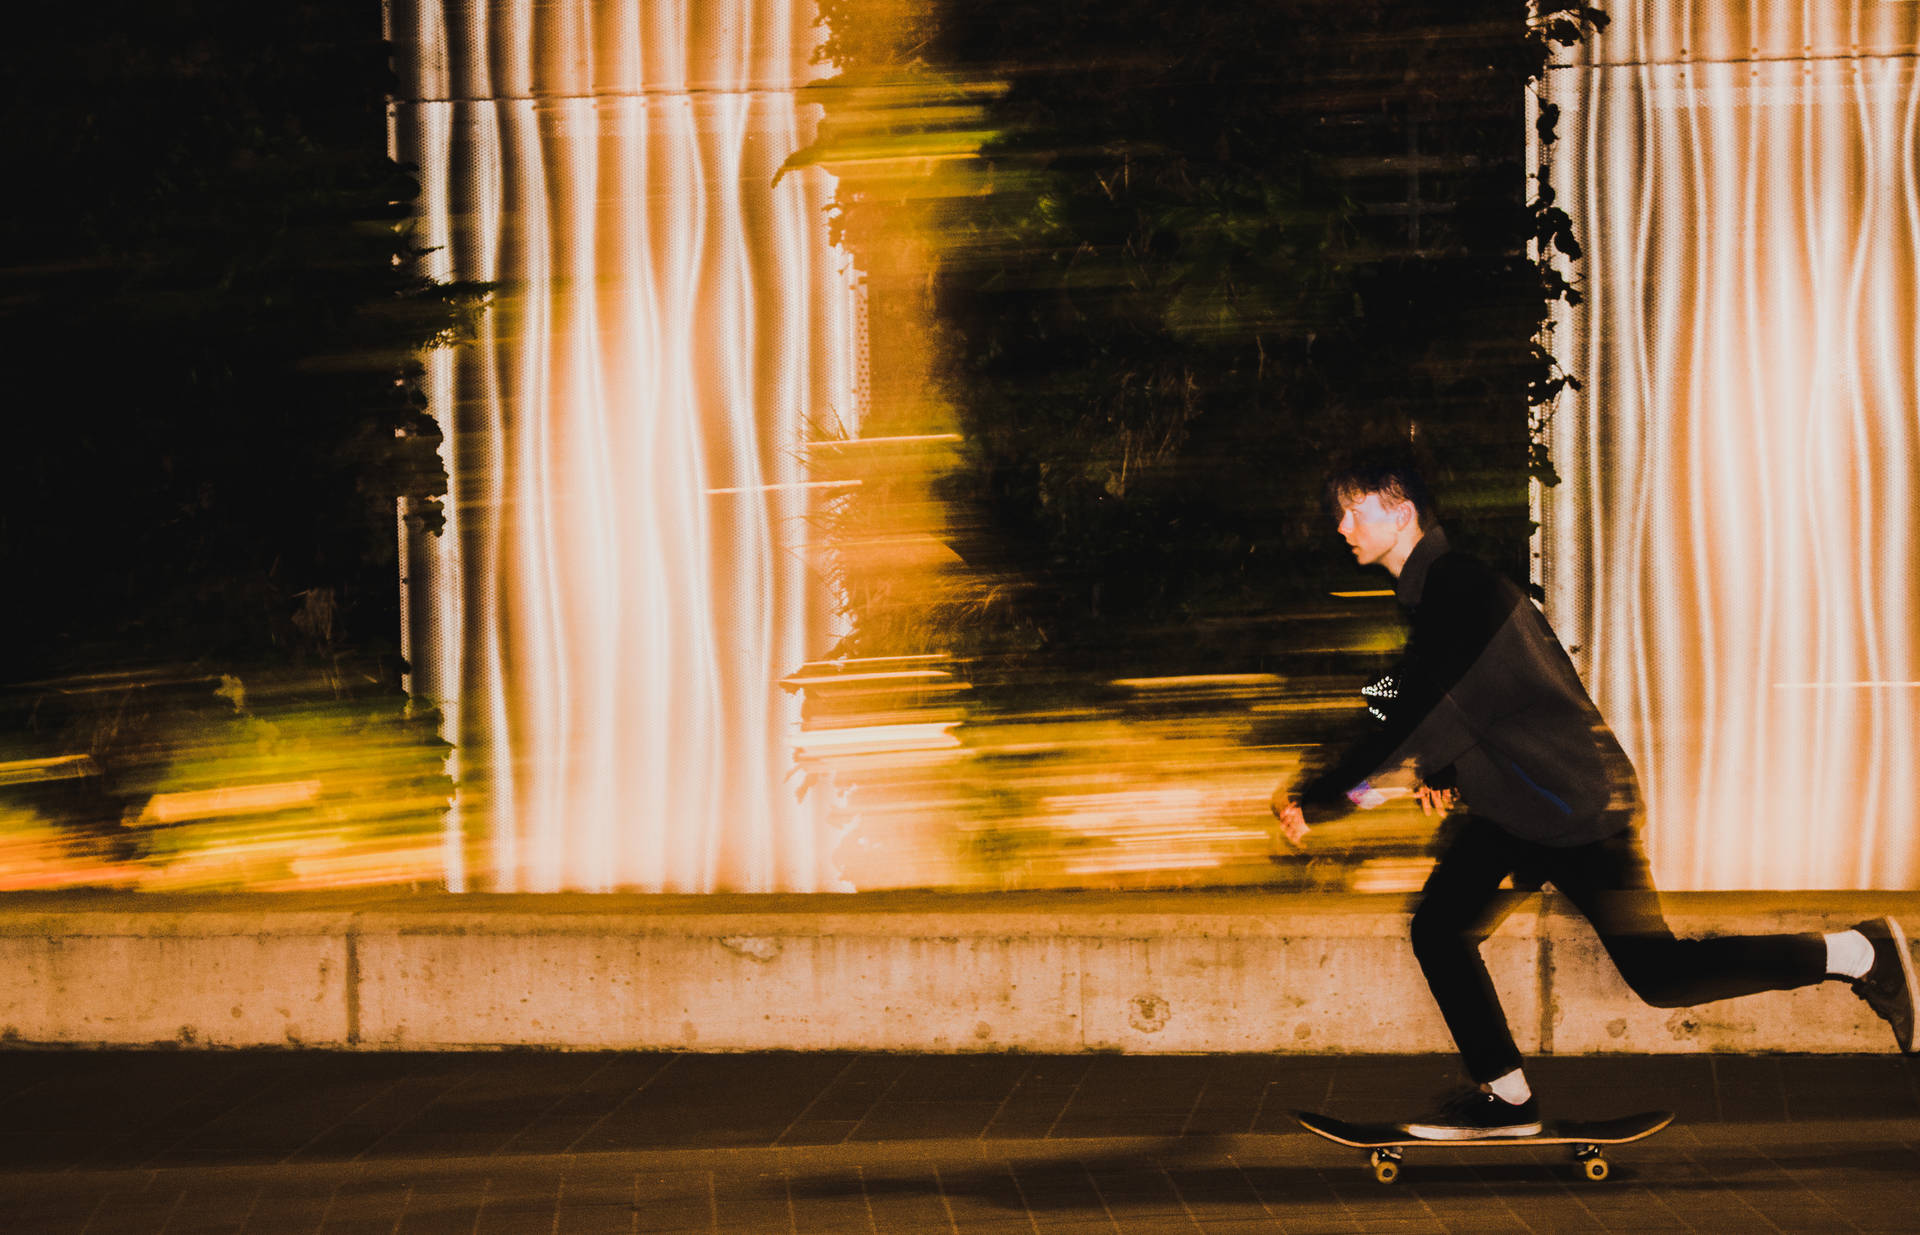 Night Skateboard Stroll